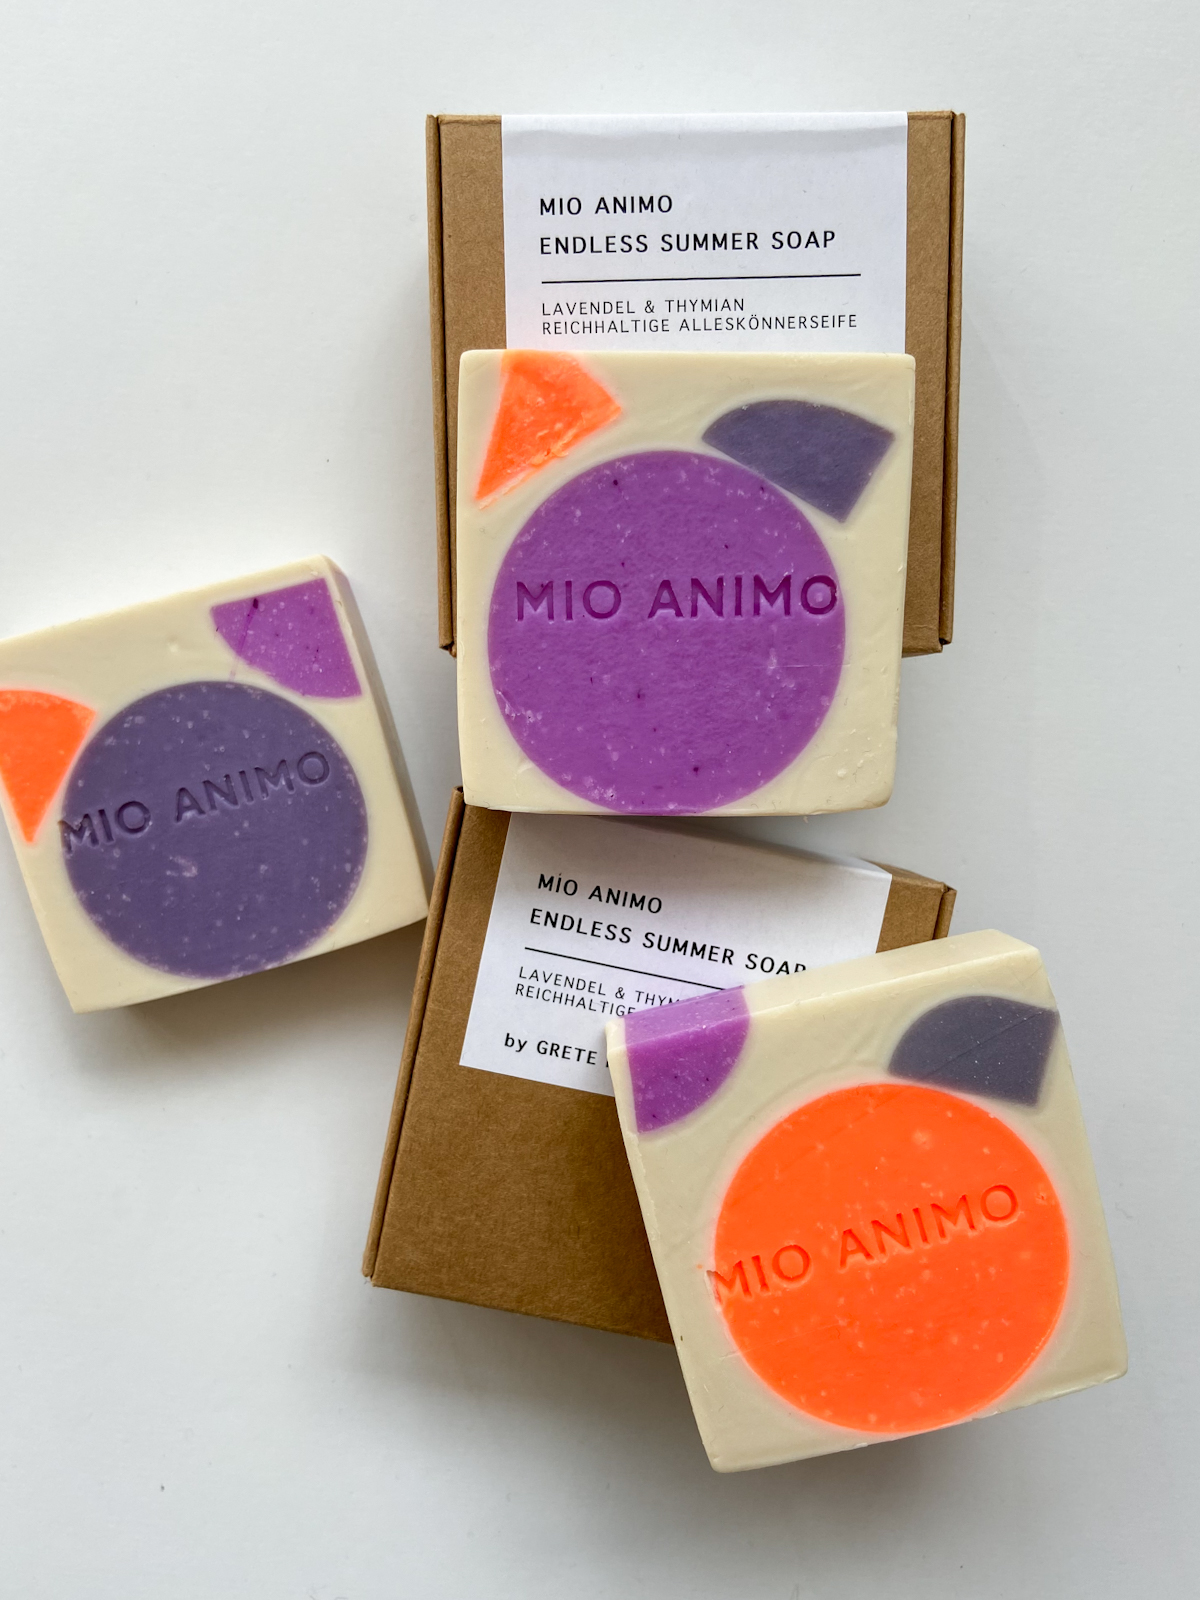 MIO ANIMO - ENDLESS SUMMER SOAP